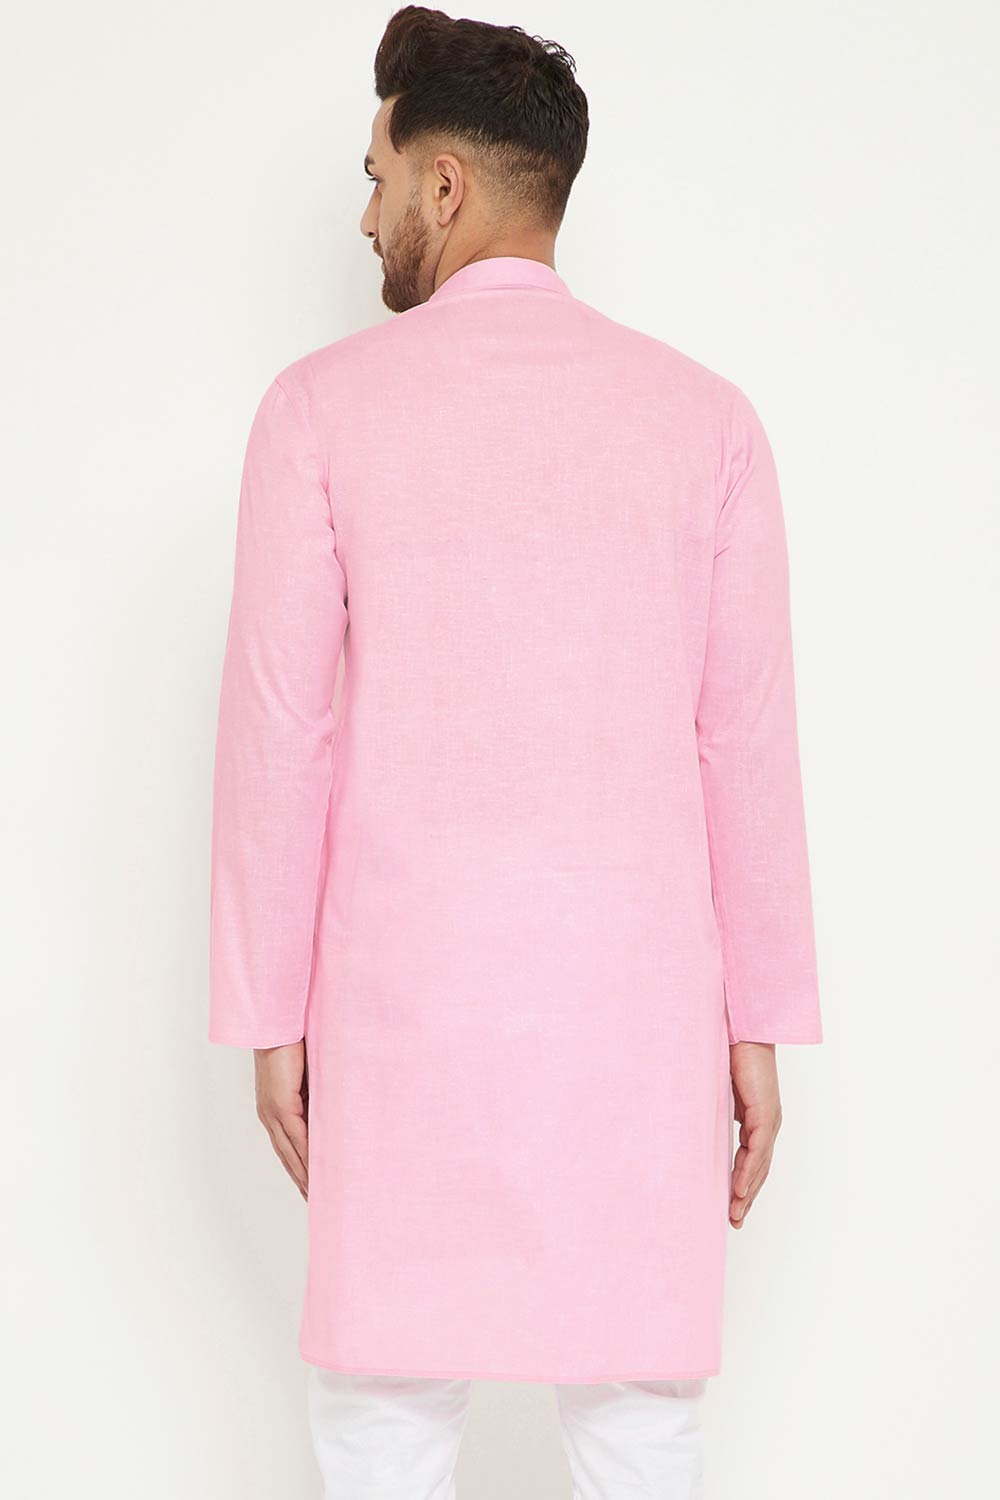 Buy Men's blended Cotton Solid Kurta in Pink - Side